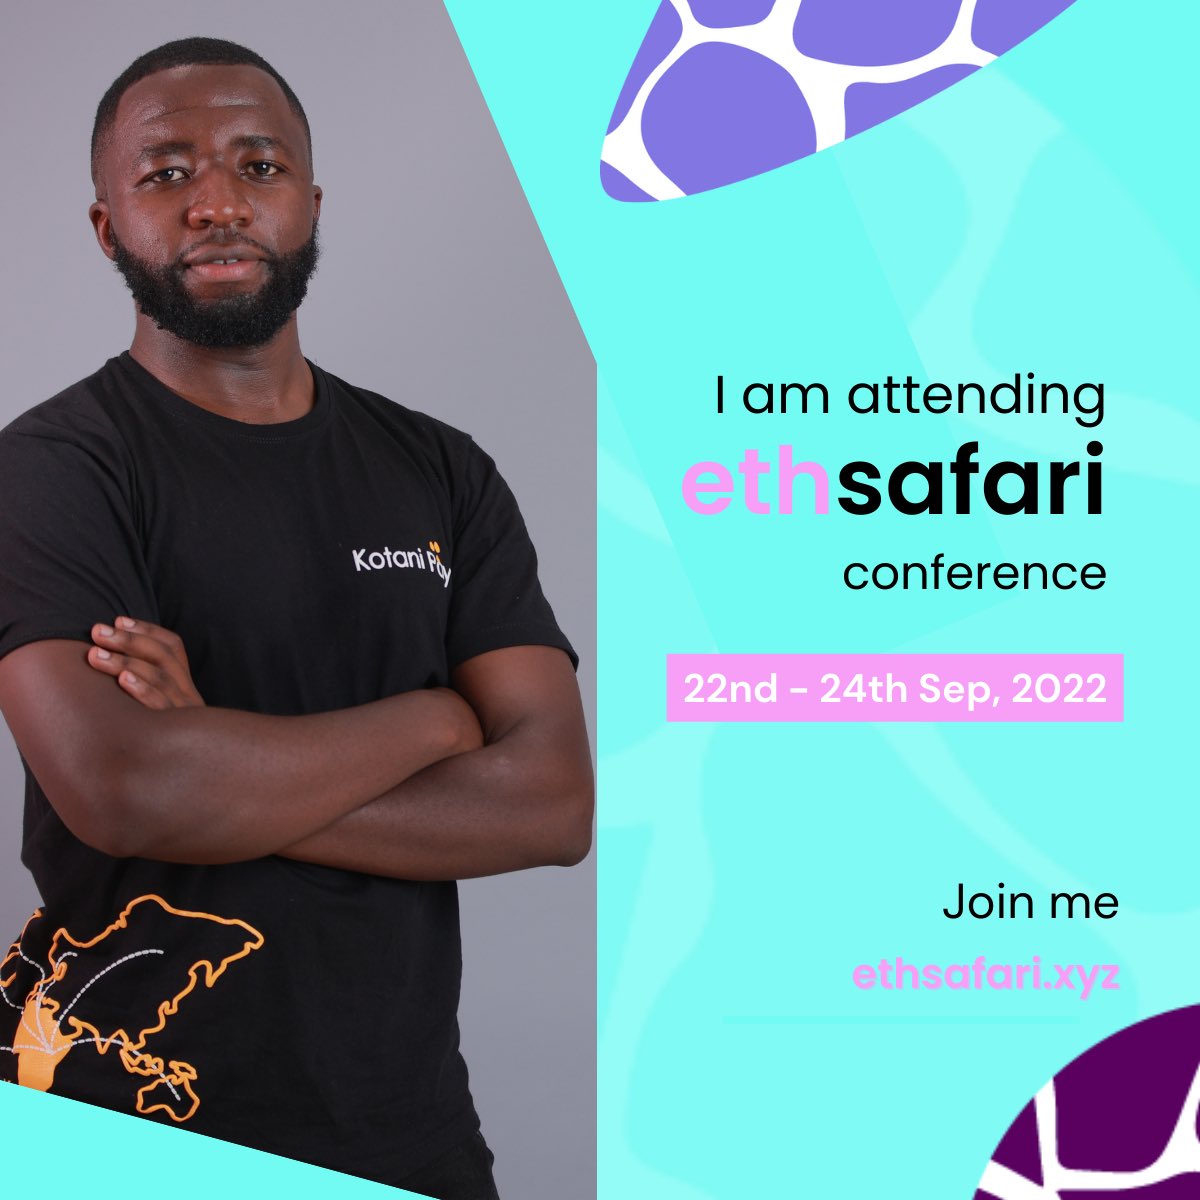 @ETHSafari Excited to represent @KotaniPay at the first @ETHSafari in #Kilifi this September. Join the space to get updates about the #Hackathon.

#KaribuSafari #ETHSafari #Web3